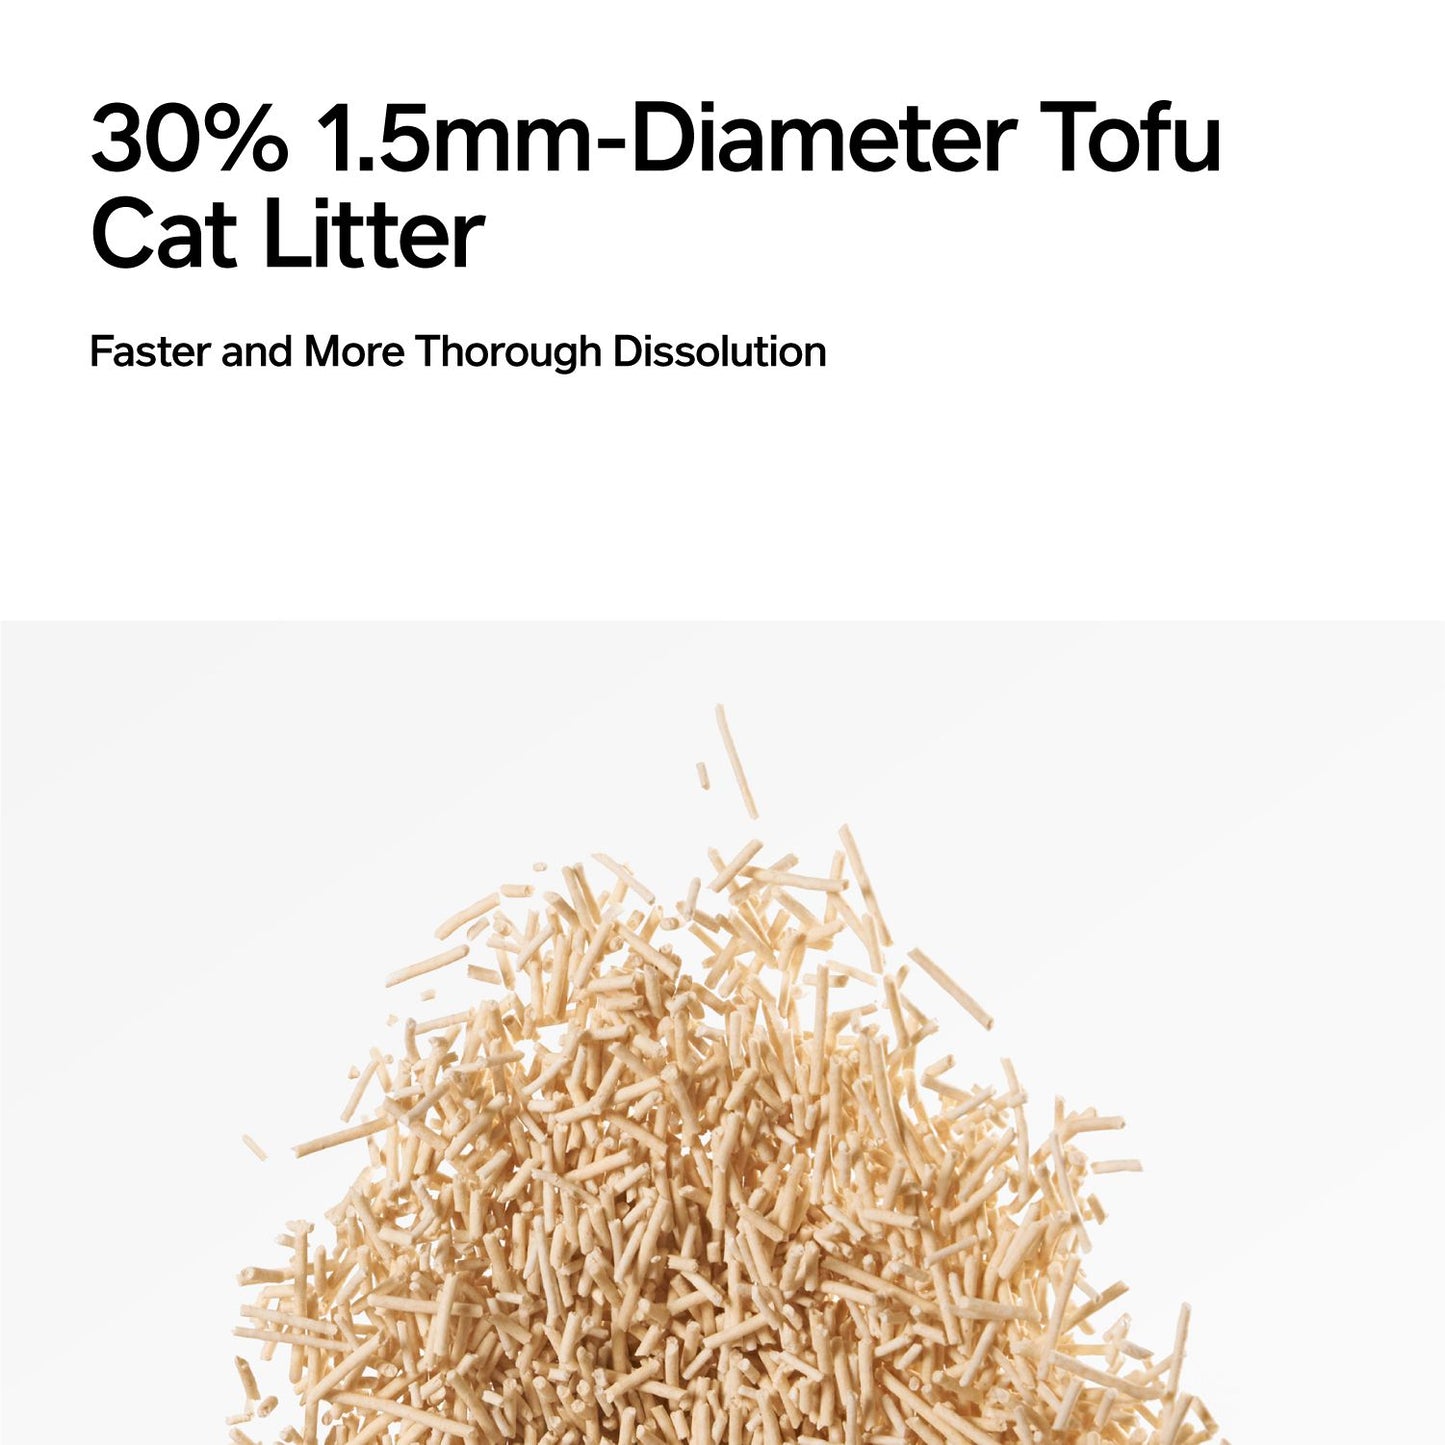 PIDAN Original Tofu Urine Blood Test & Hematuria Detection Cat Litter